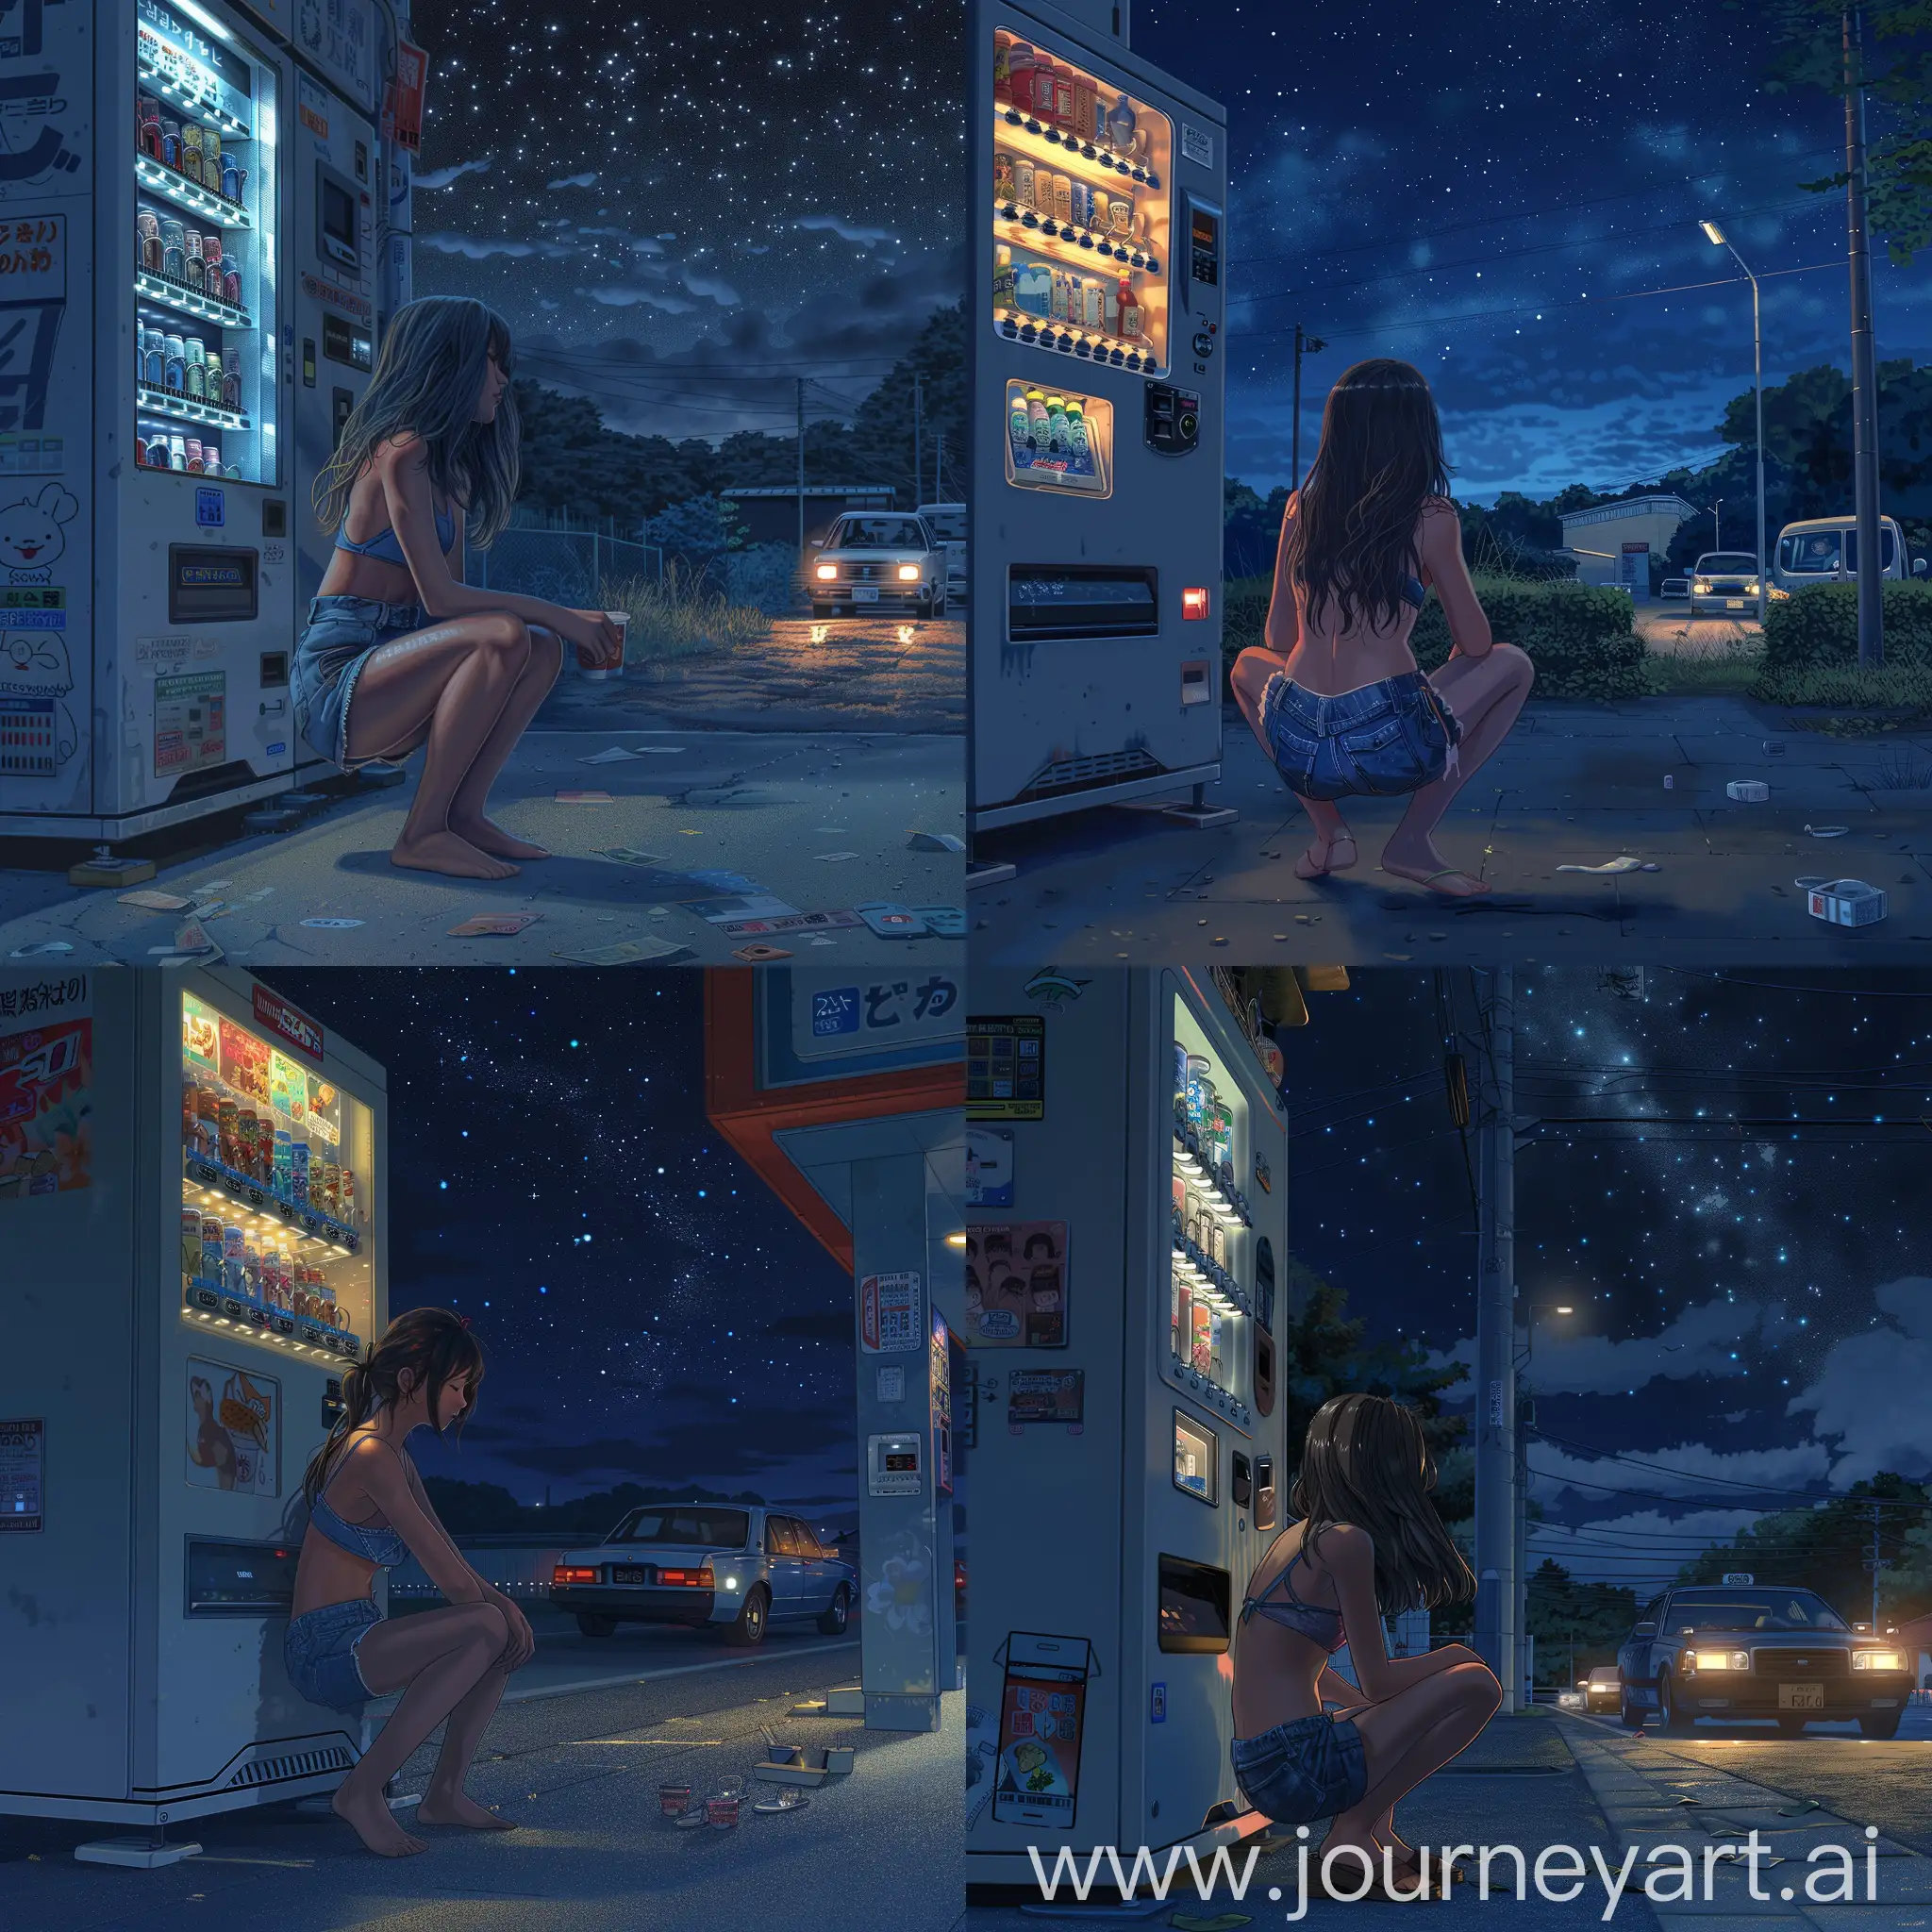 Night-Scene-Girl-at-Tokyo-Vending-Machine-with-Starry-Sky